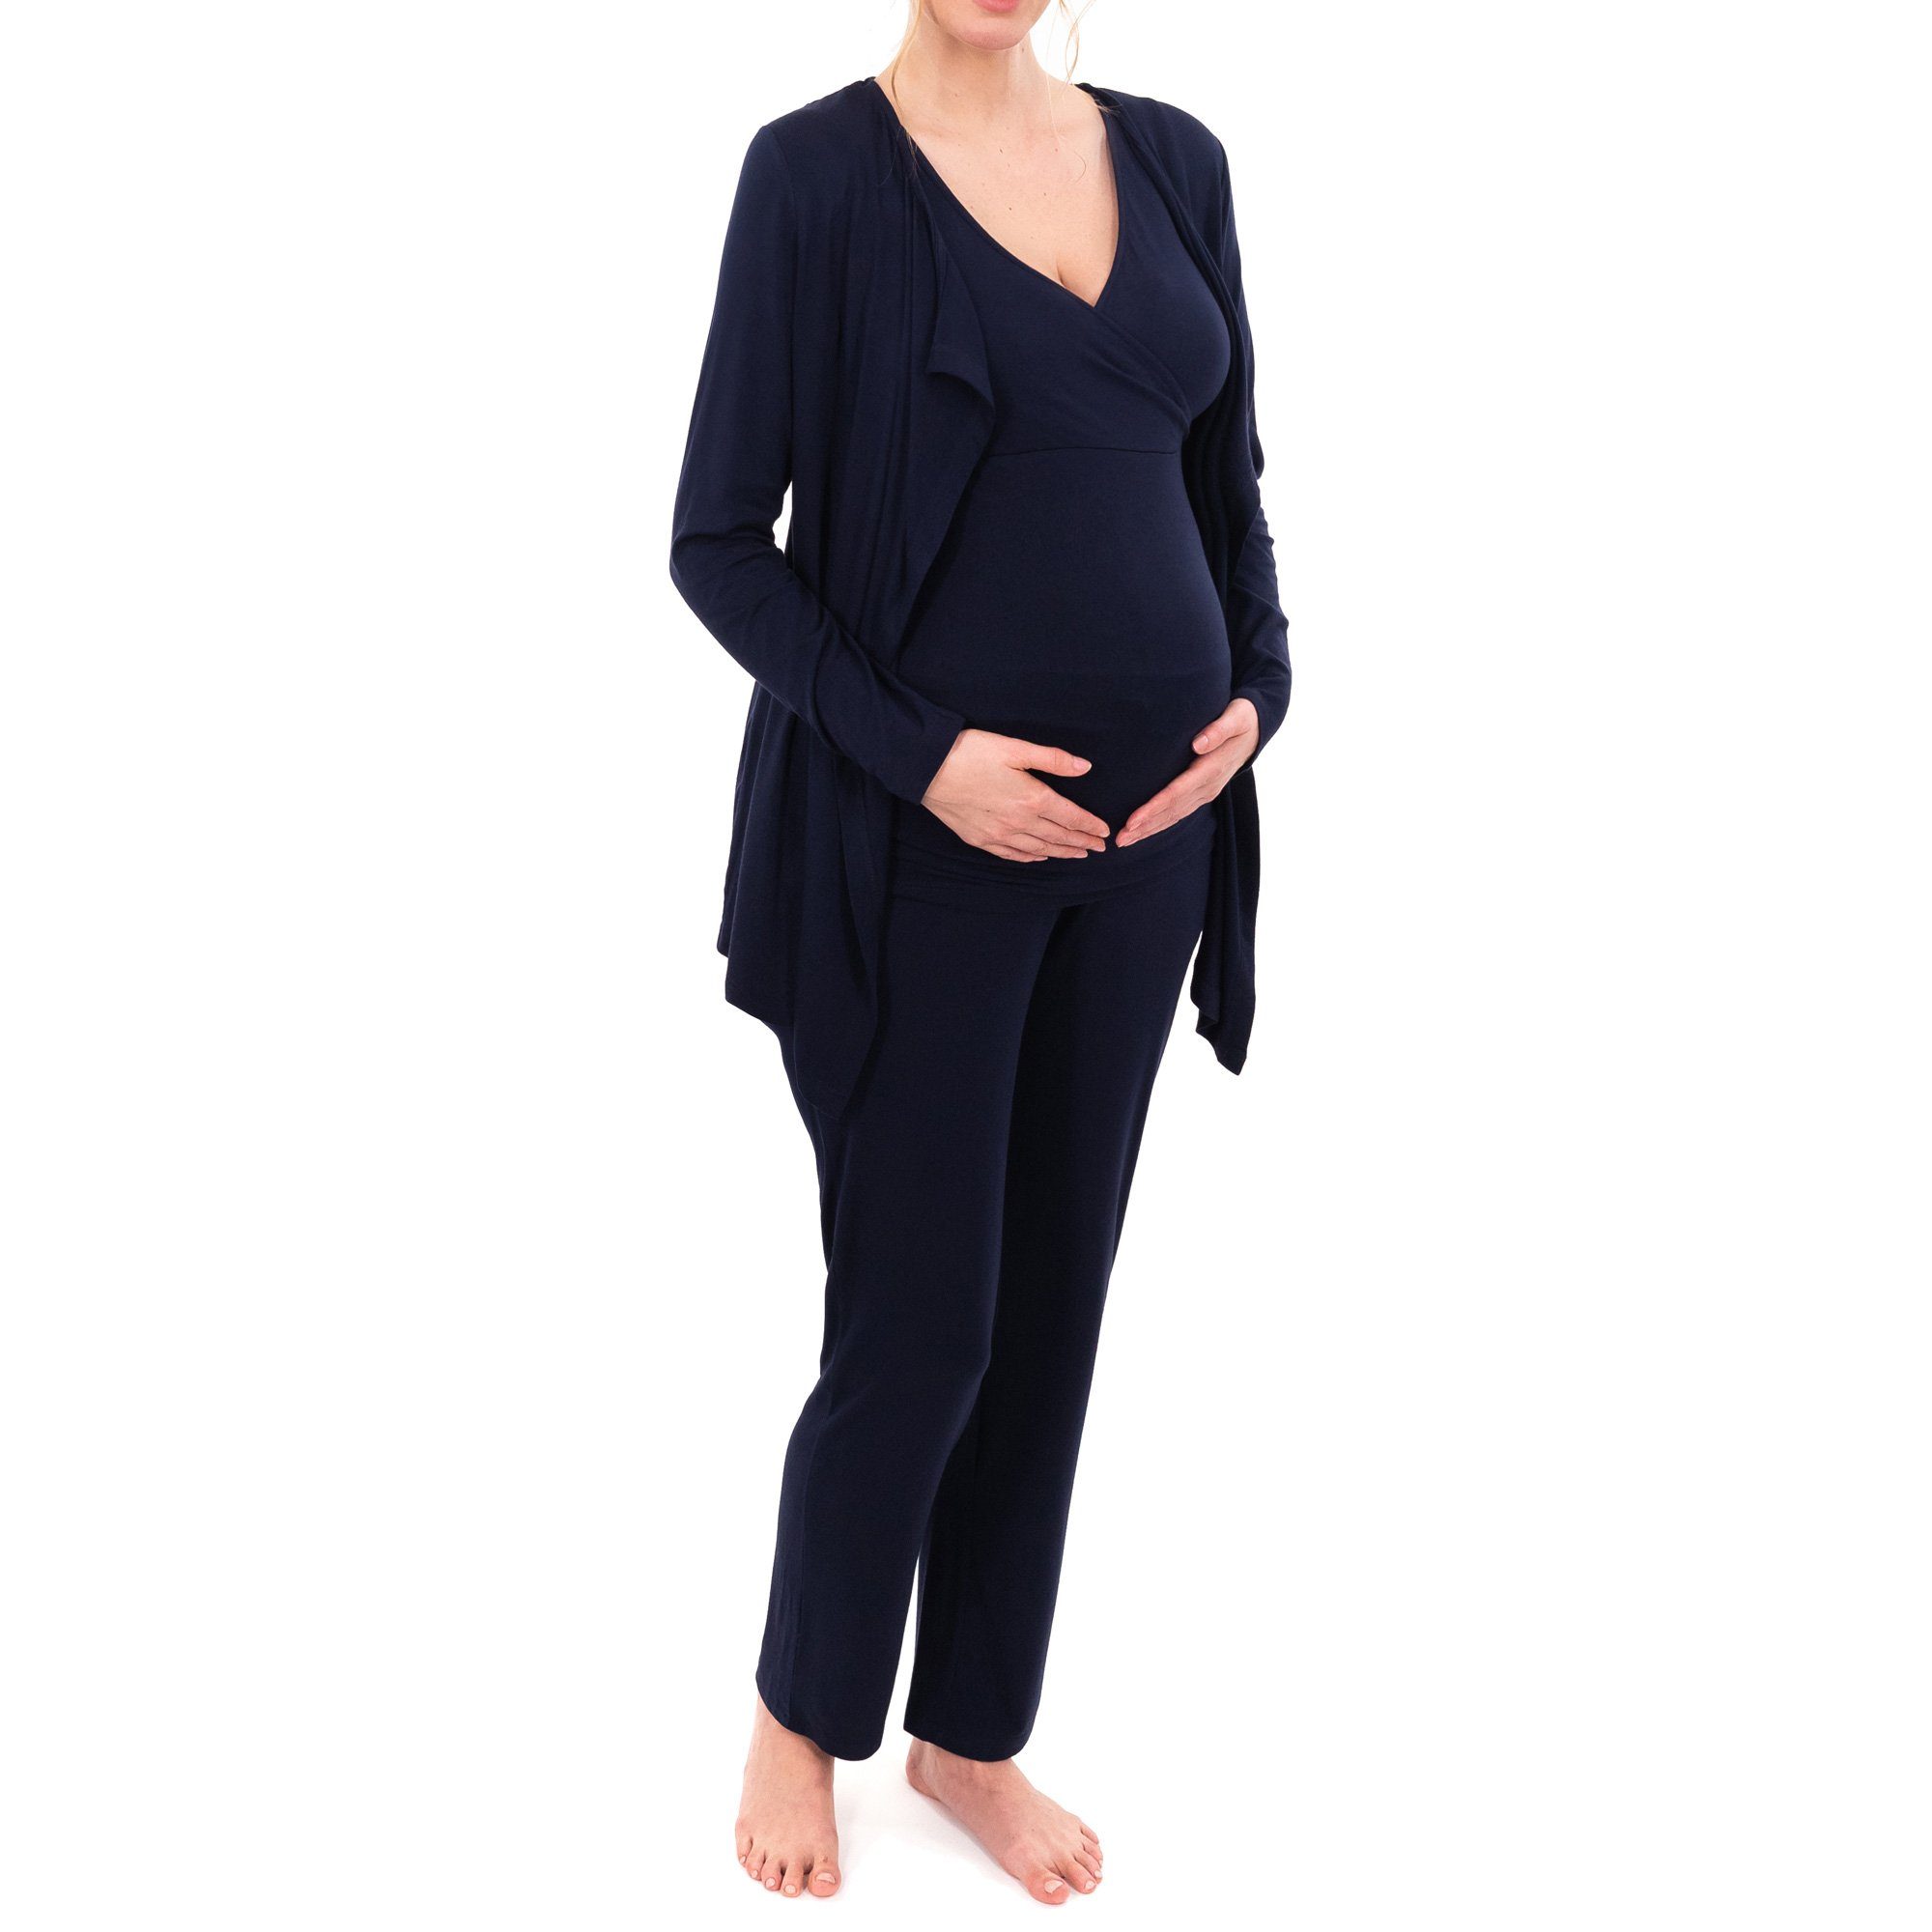 Herzmutter Umstandspyjama Schwangerschaft - Pyjama Set - Homewear - Weich  (3 tlg)